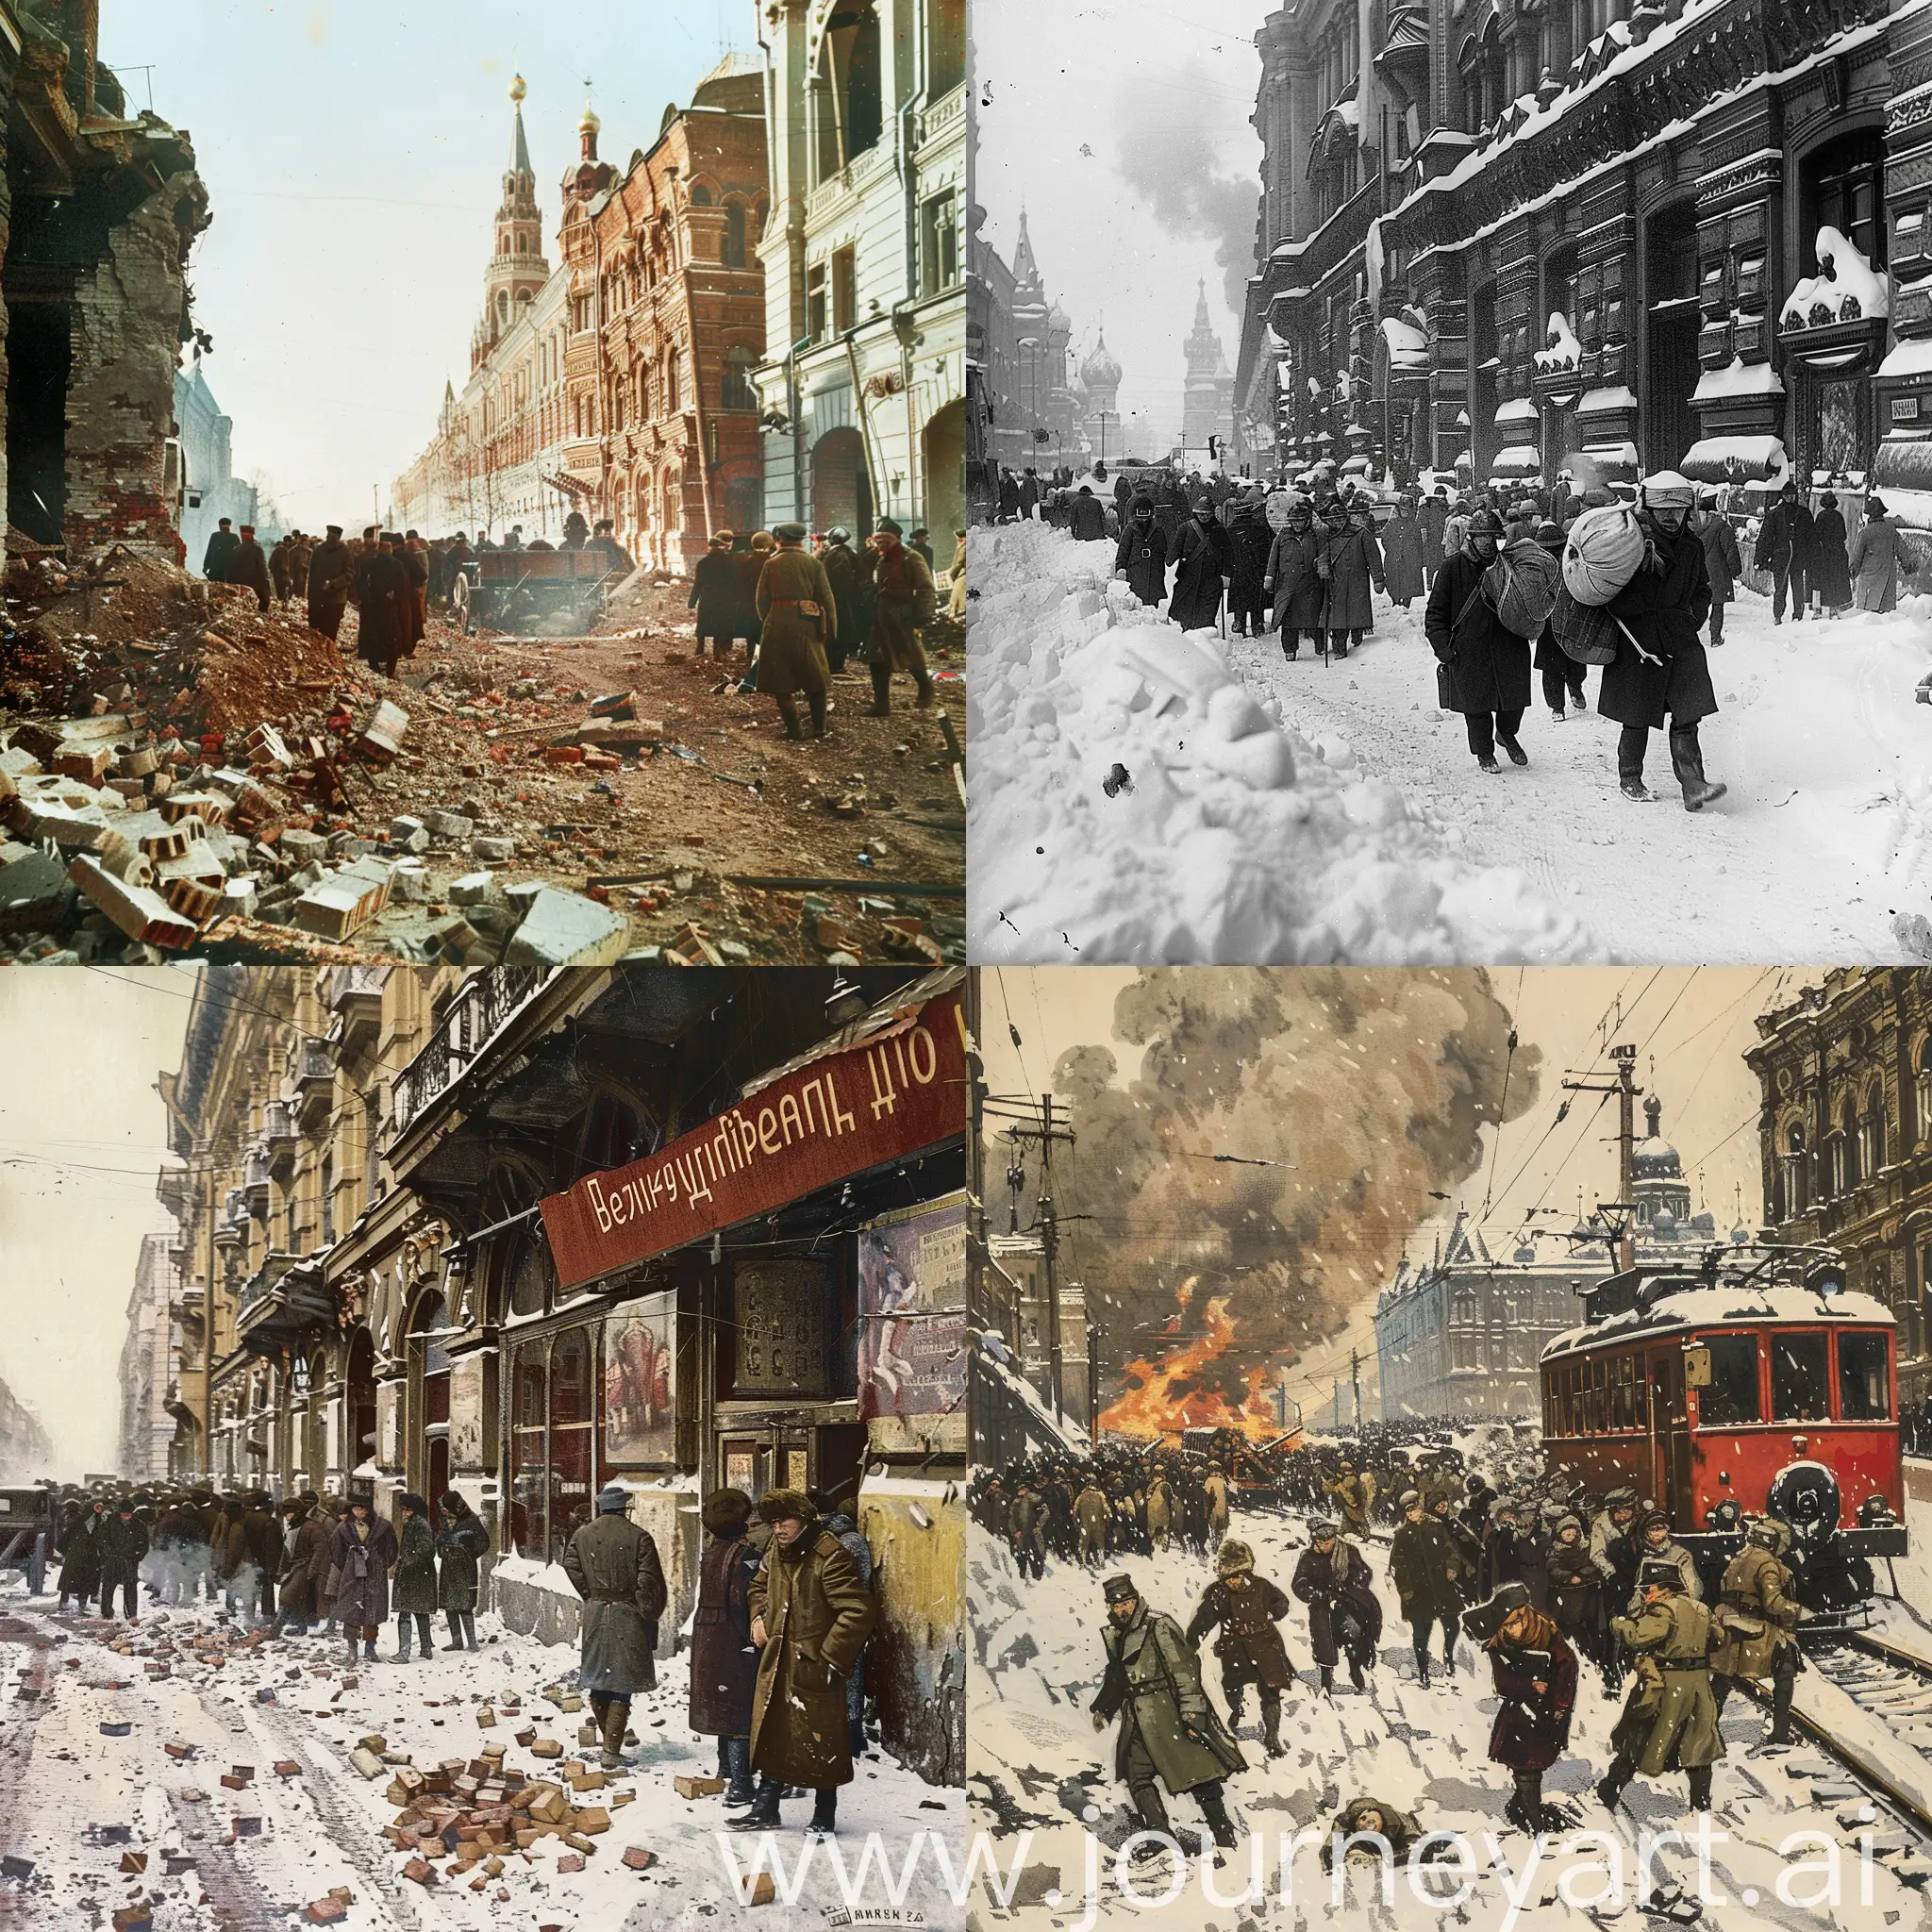 Russian-Economic-Crisis-of-1916-People-Struggling-Amid-Turmoil